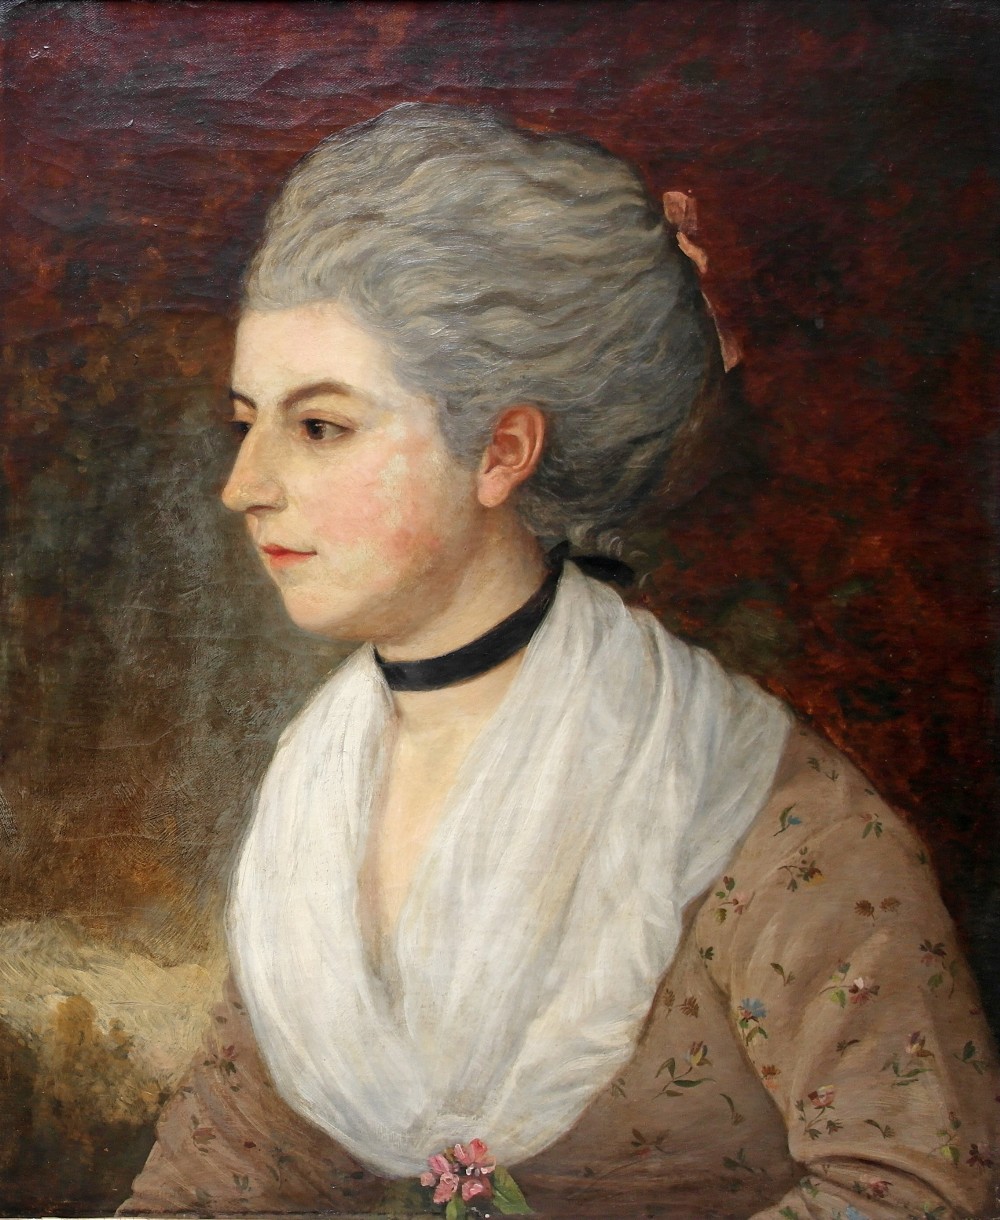 Follower of George Romney (British, 1734-1802):
Portrait of a lady, oil on canvas, H 59 x W 49 cm